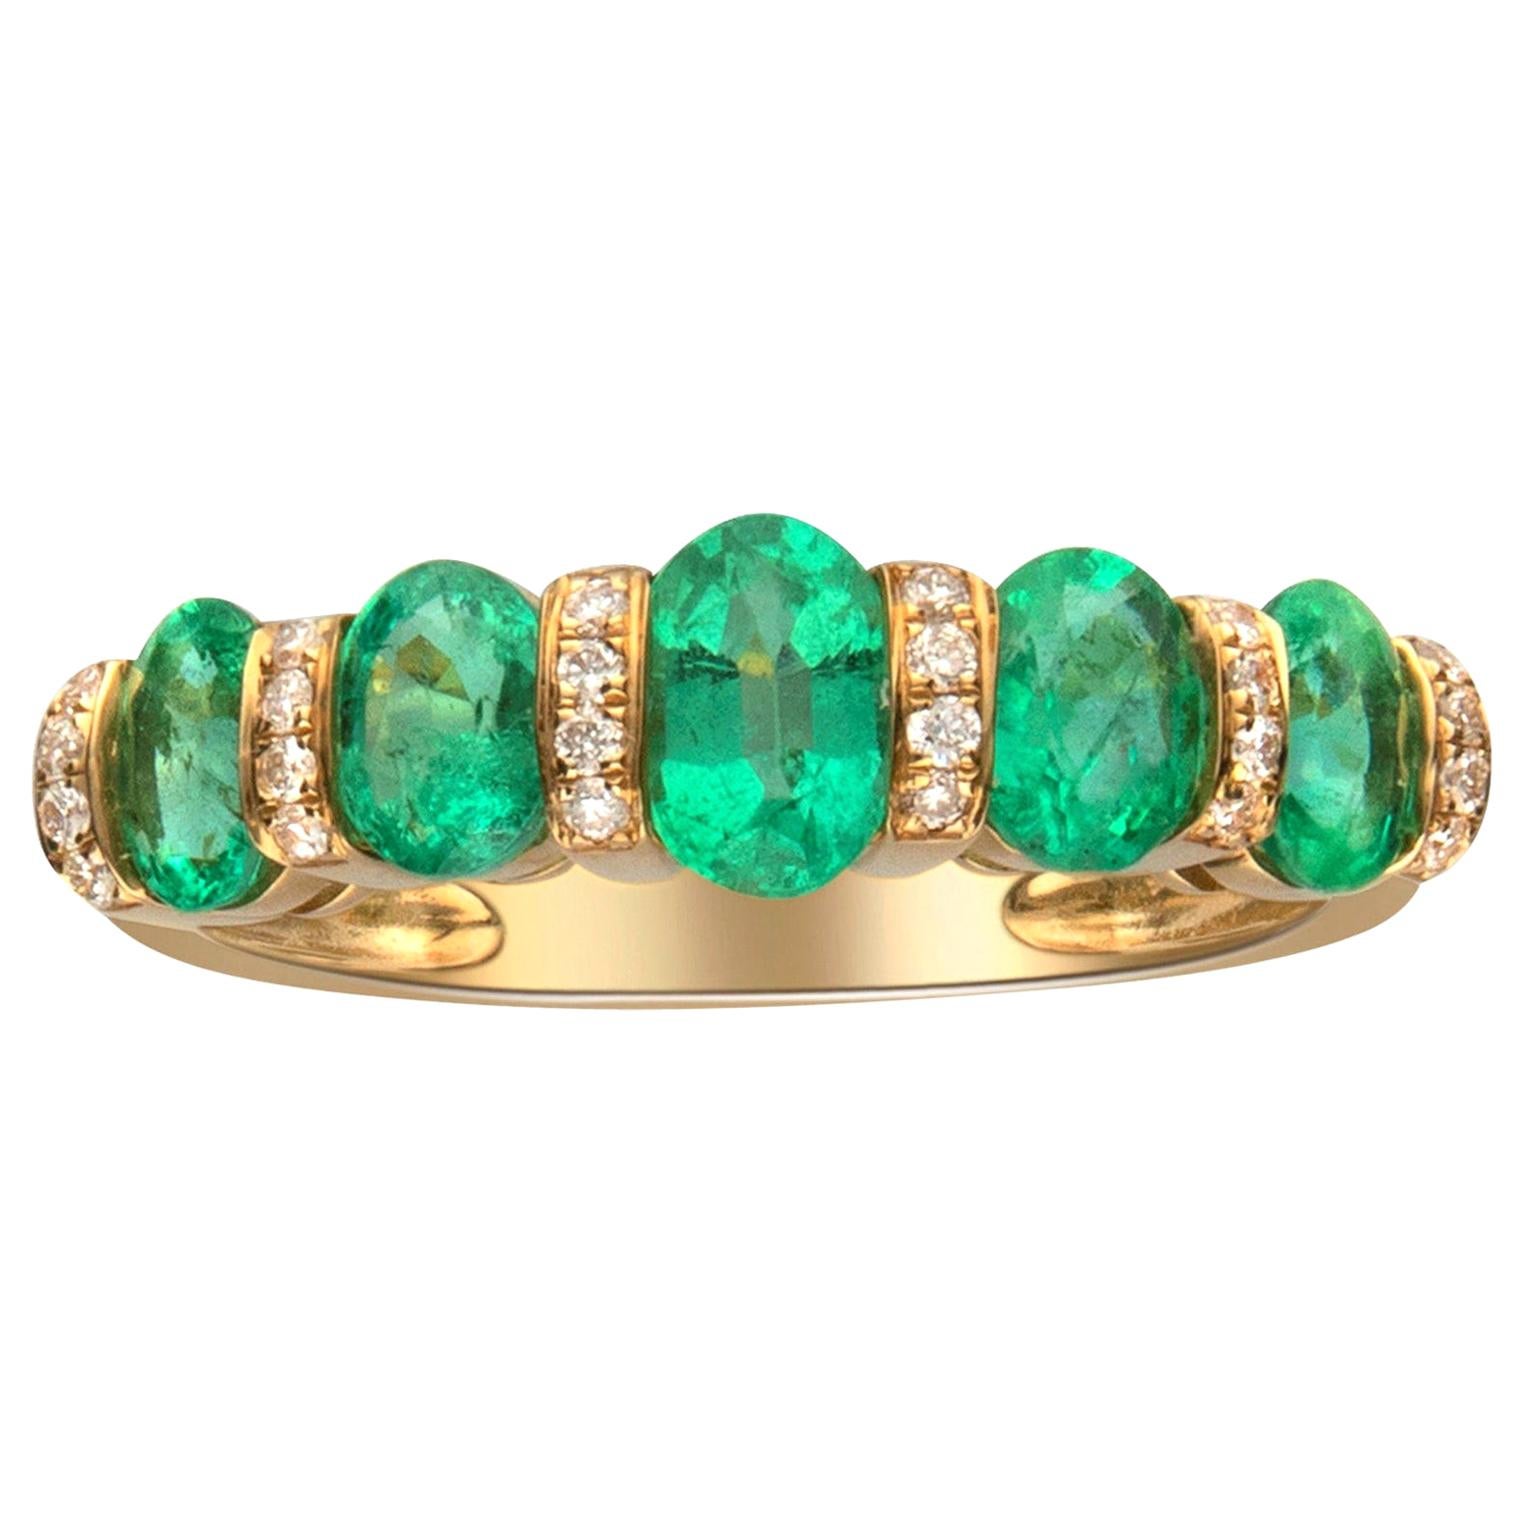 1.61 Carat Emerald and Diamond 14 Karat Yellow Gold Band Ring